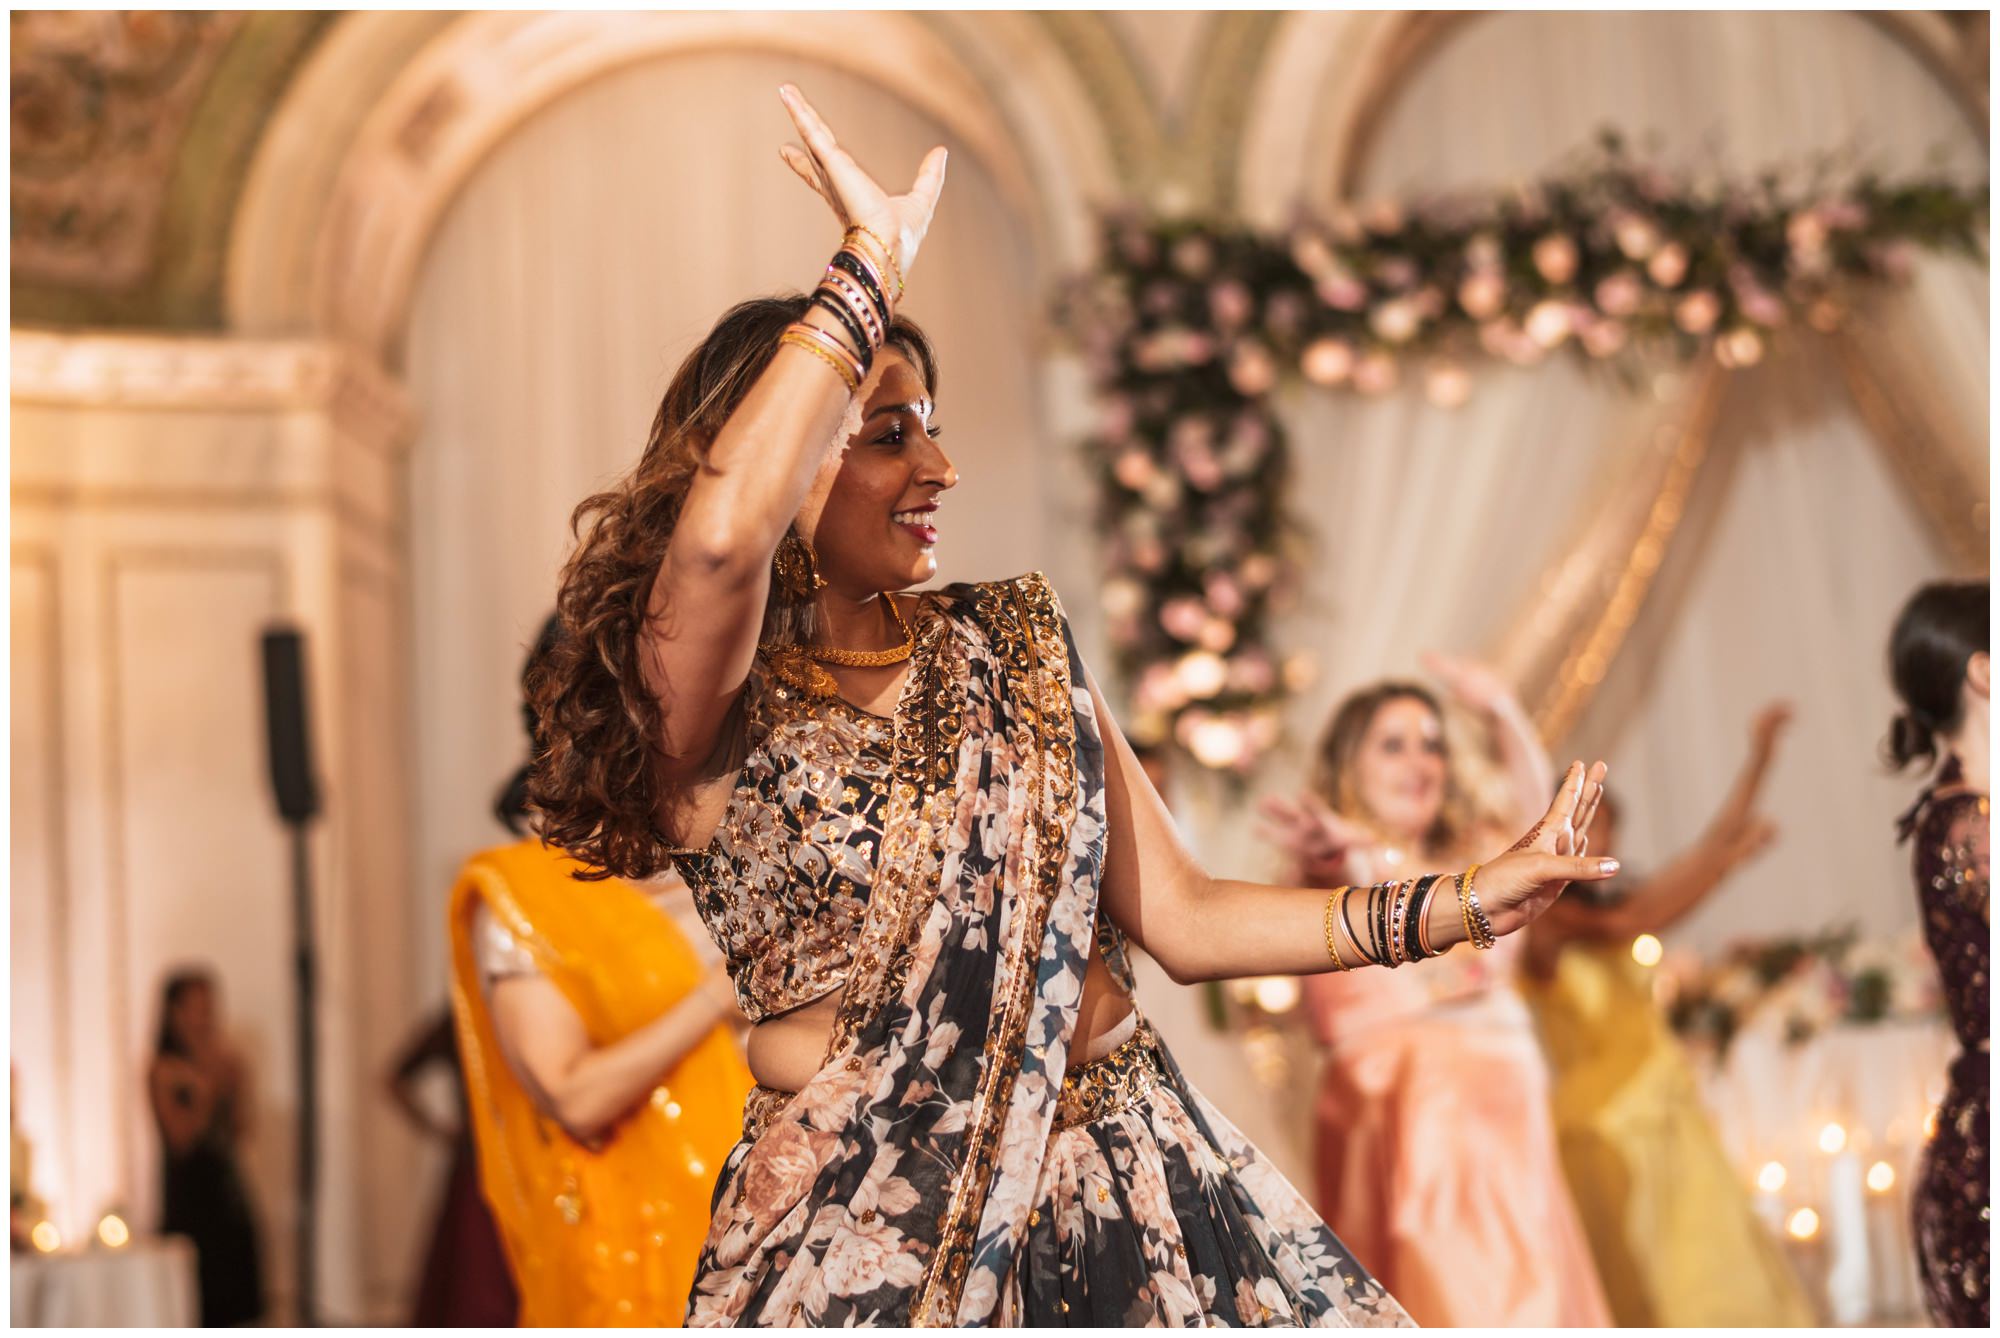 traditional Indian wedding dances